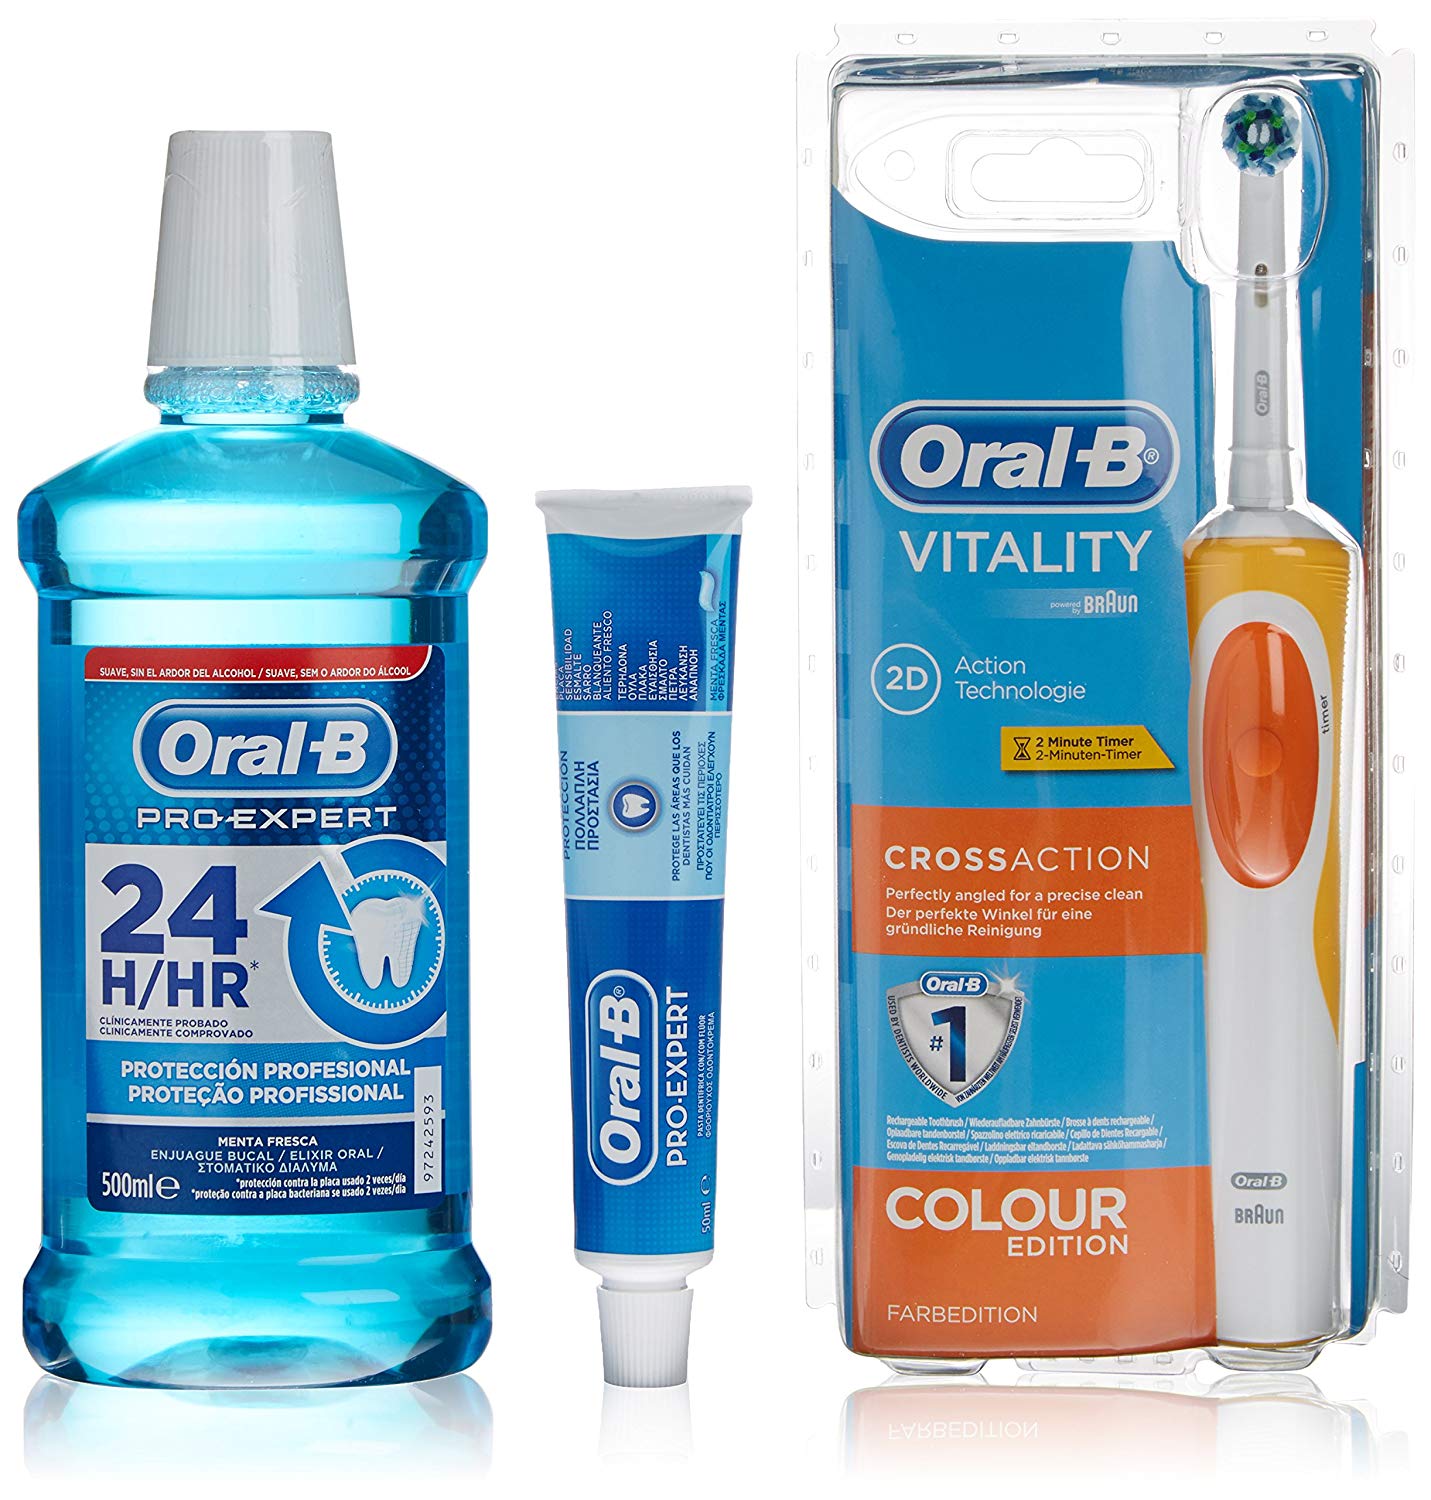 Oral-B Vitality + Set de regalo